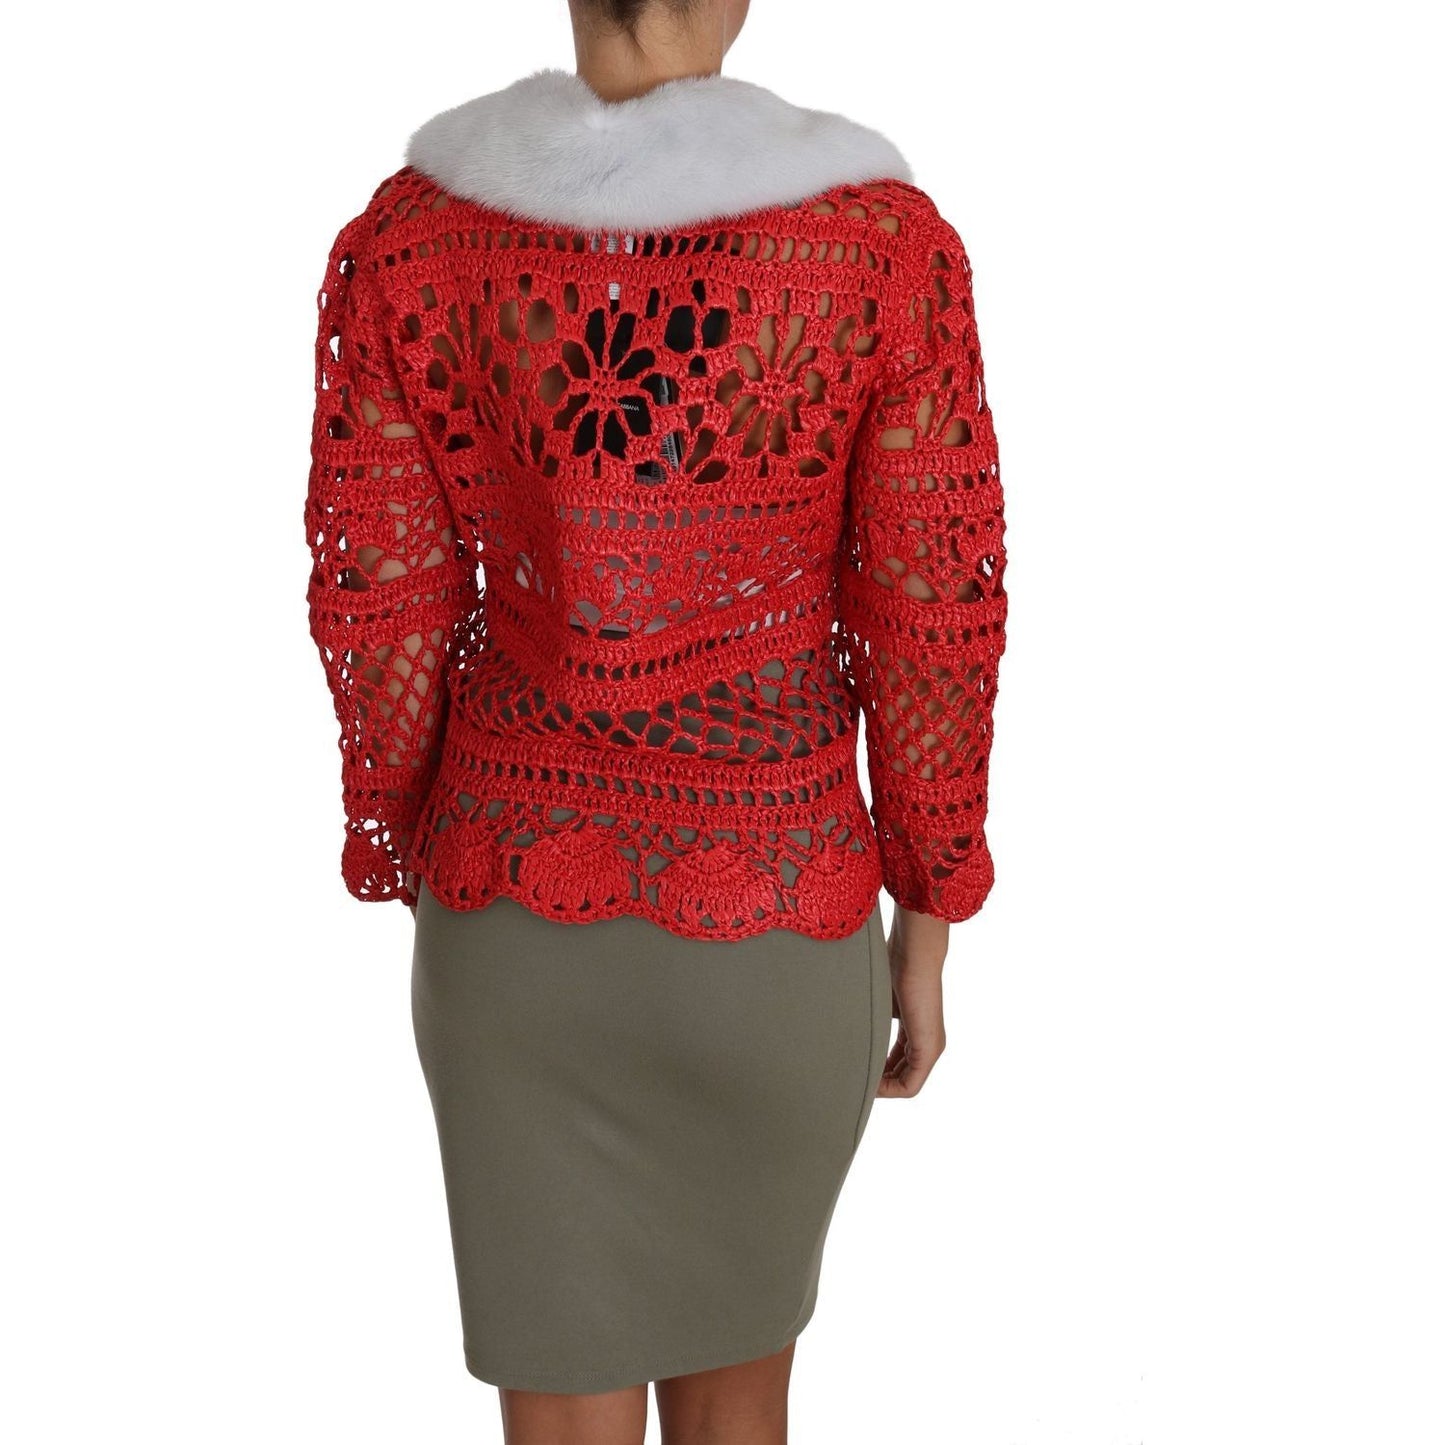 Dolce & Gabbana Elegant Red Crochet Knit Cardigan with Fur Collar red-cardigan-crochet-knit-raffia-sweater 648775-red-cardigan-crochet-knit-raffia-sweater-1.jpg